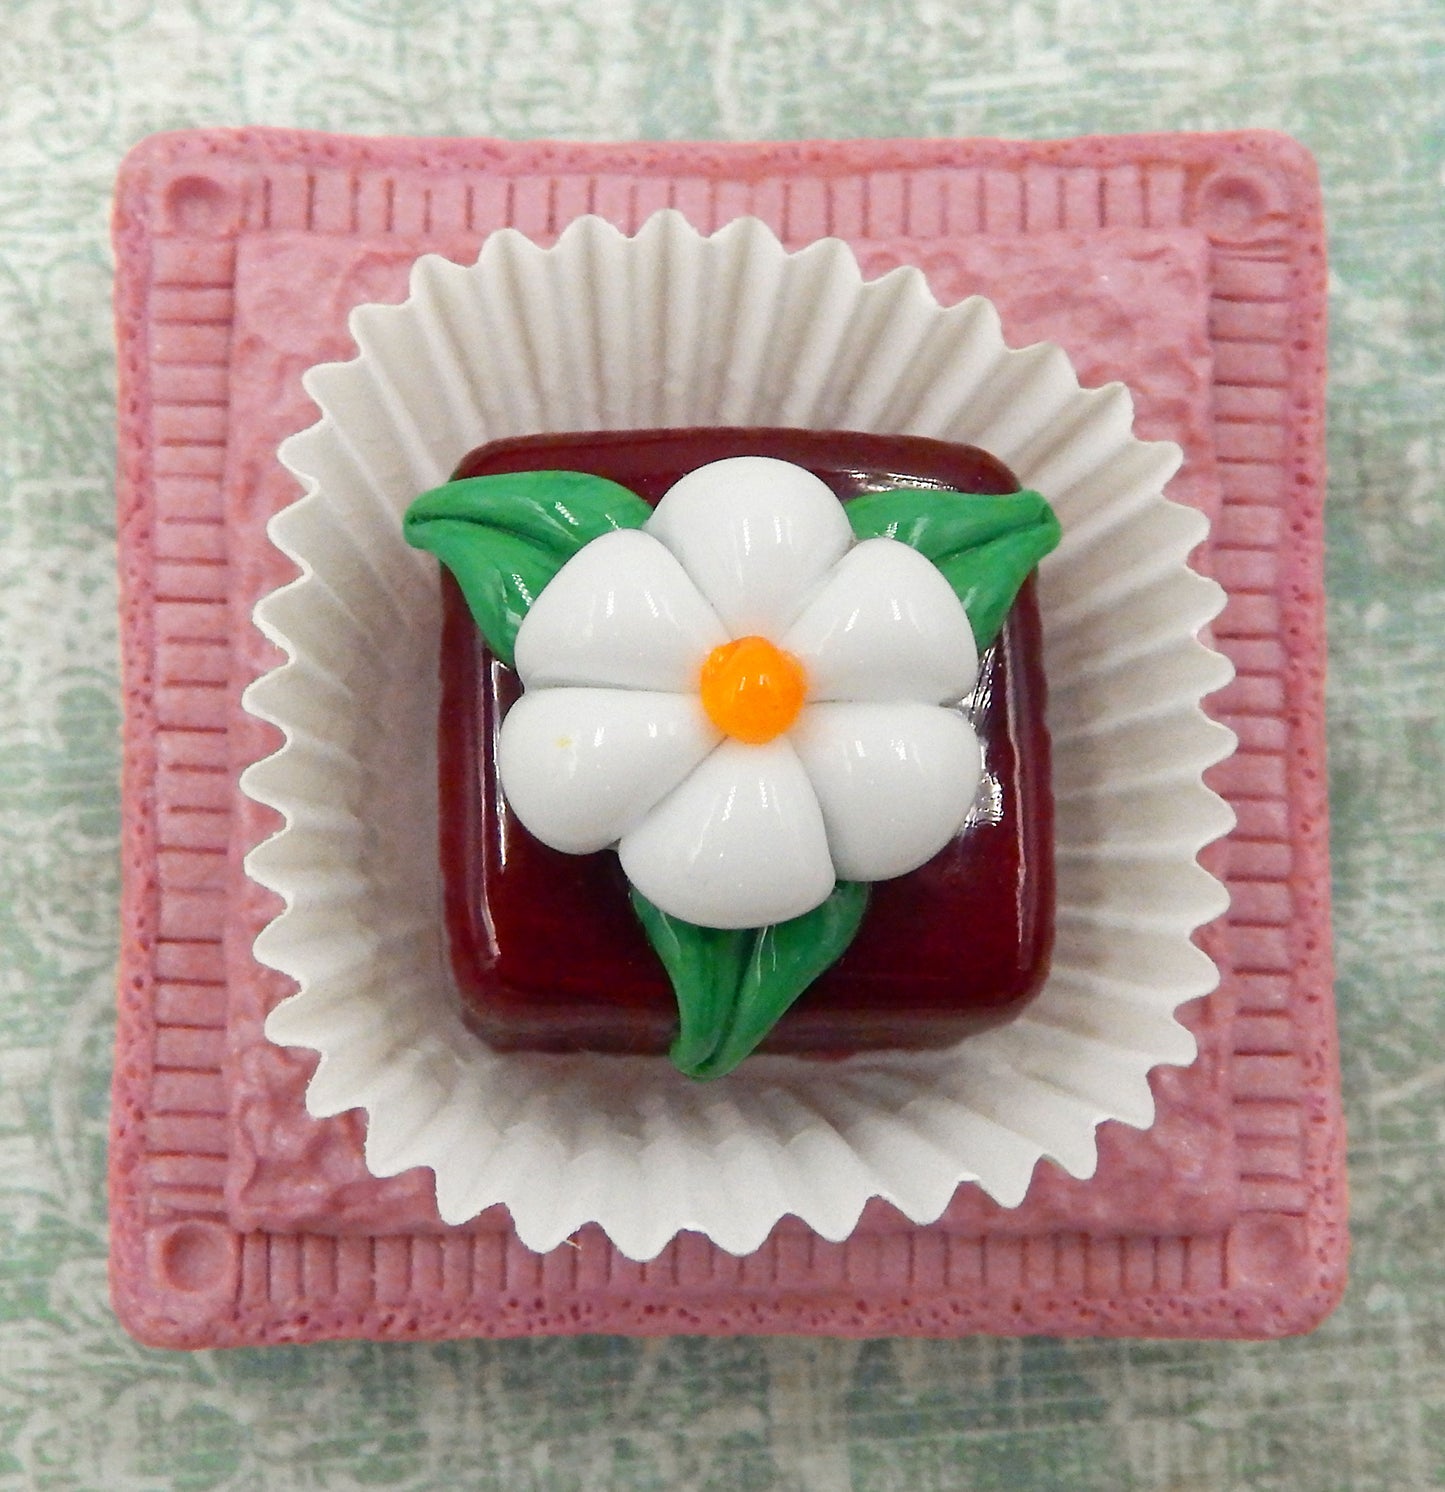 Deep Cherry Chocolate Cube with White Chocolate Flower (15-024HW)